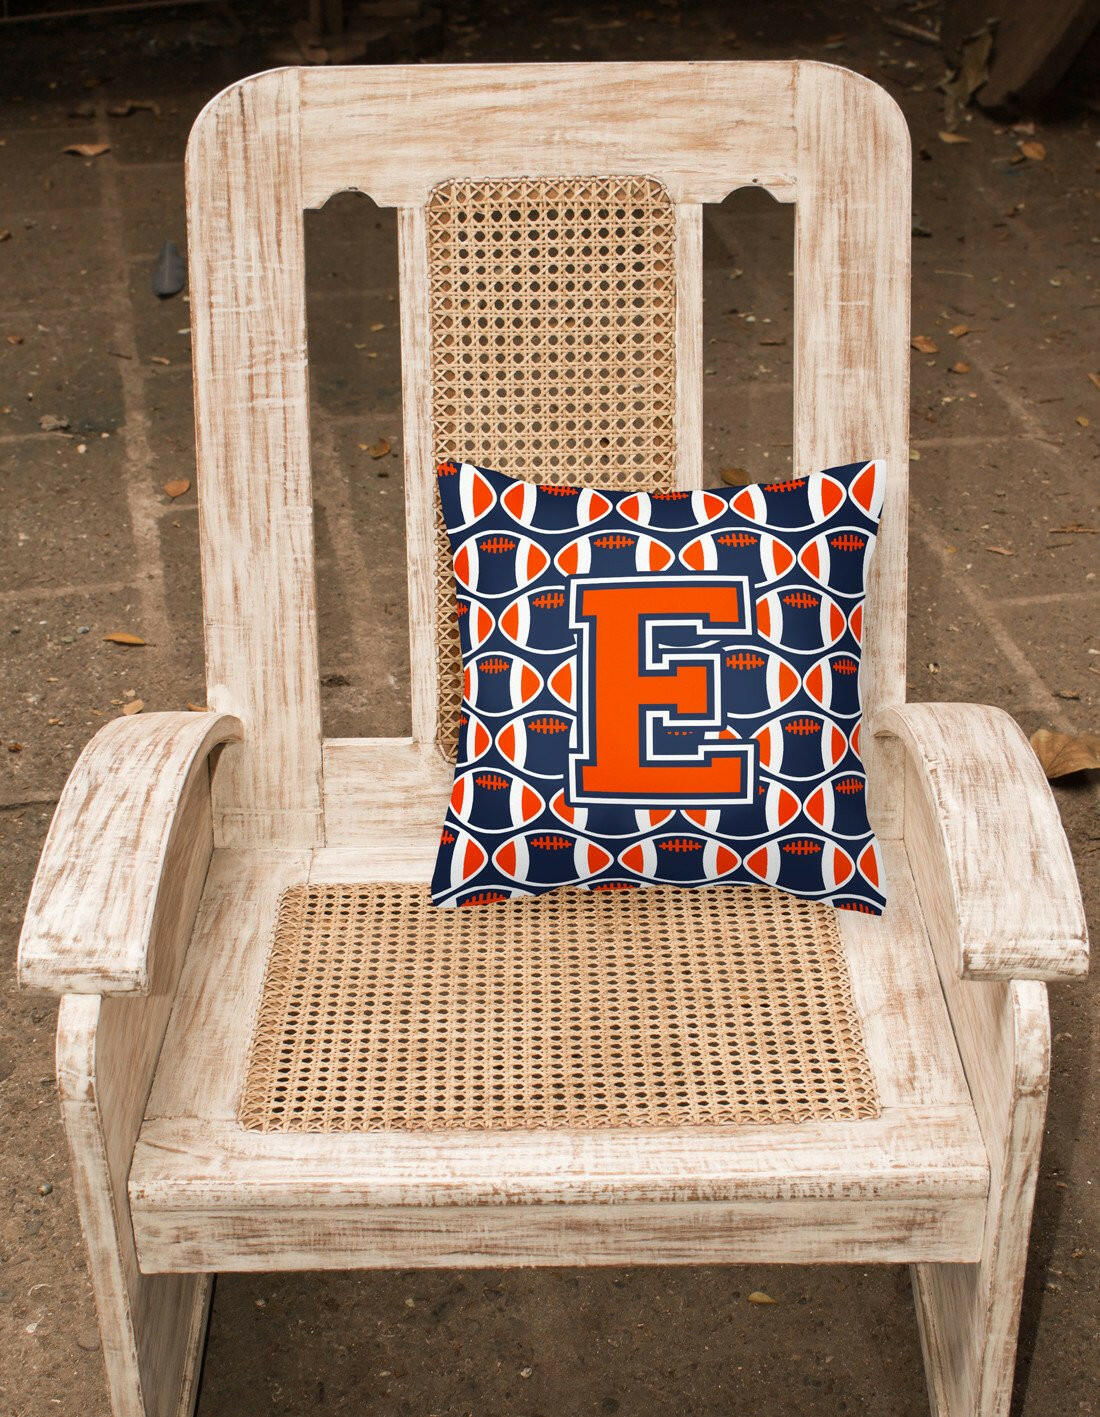 Letter E Football Orange, Blue and white Fabric Decorative Pillow CJ1066-EPW1414 by Caroline's Treasures